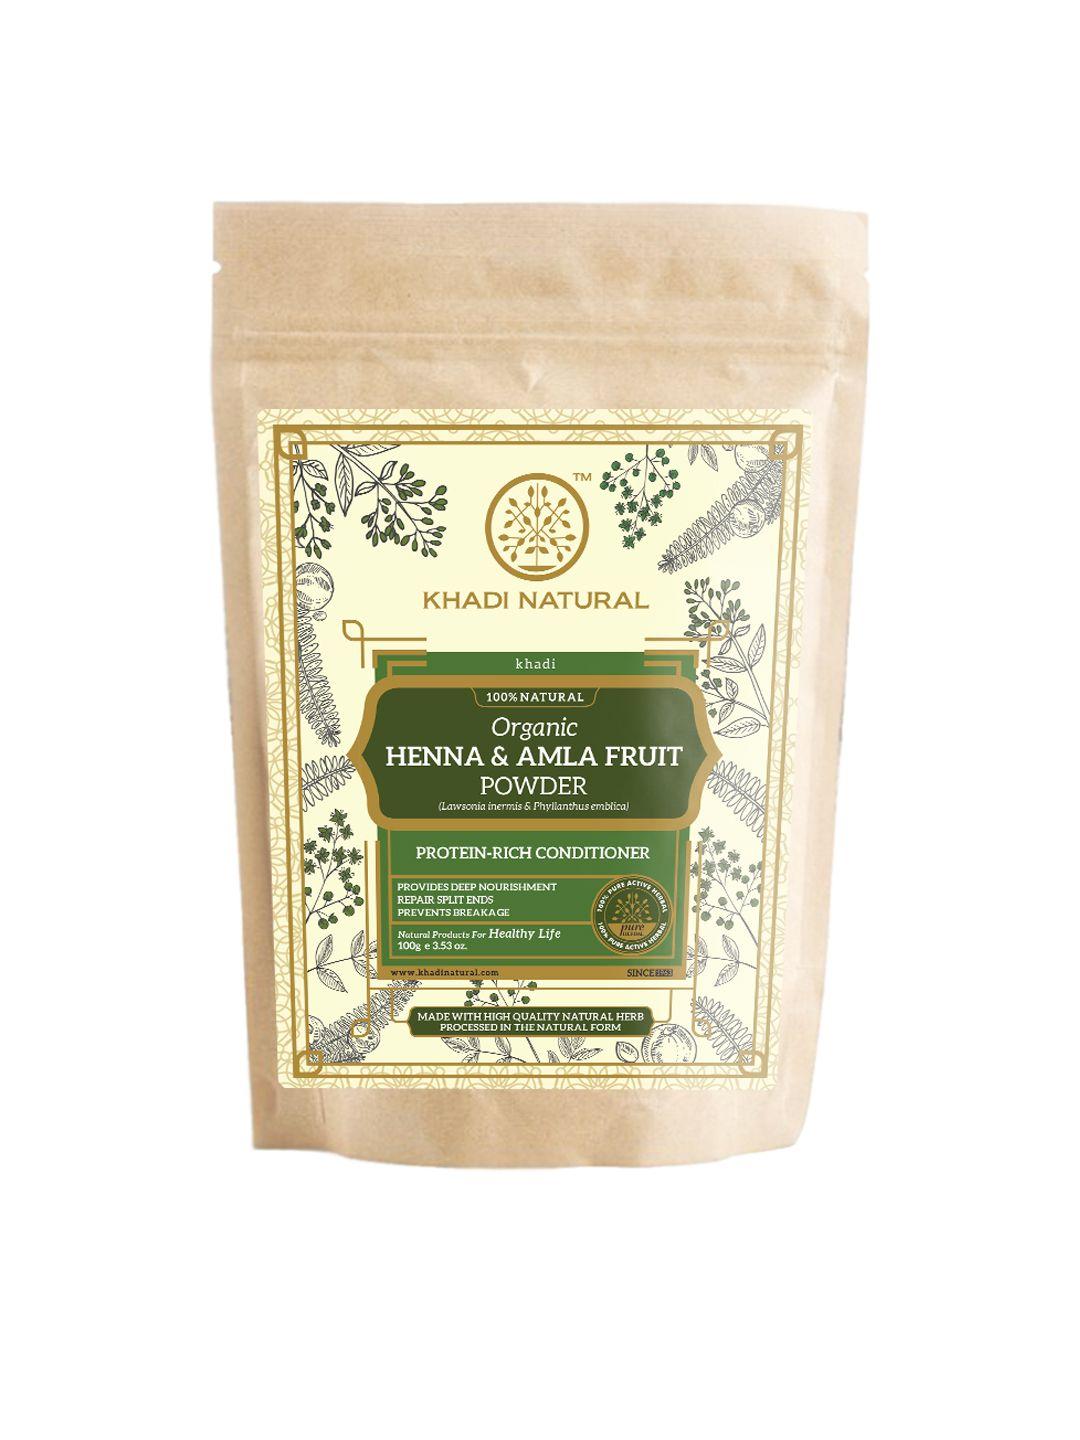 khadi natural henna & amla fruit organic powder- 100g